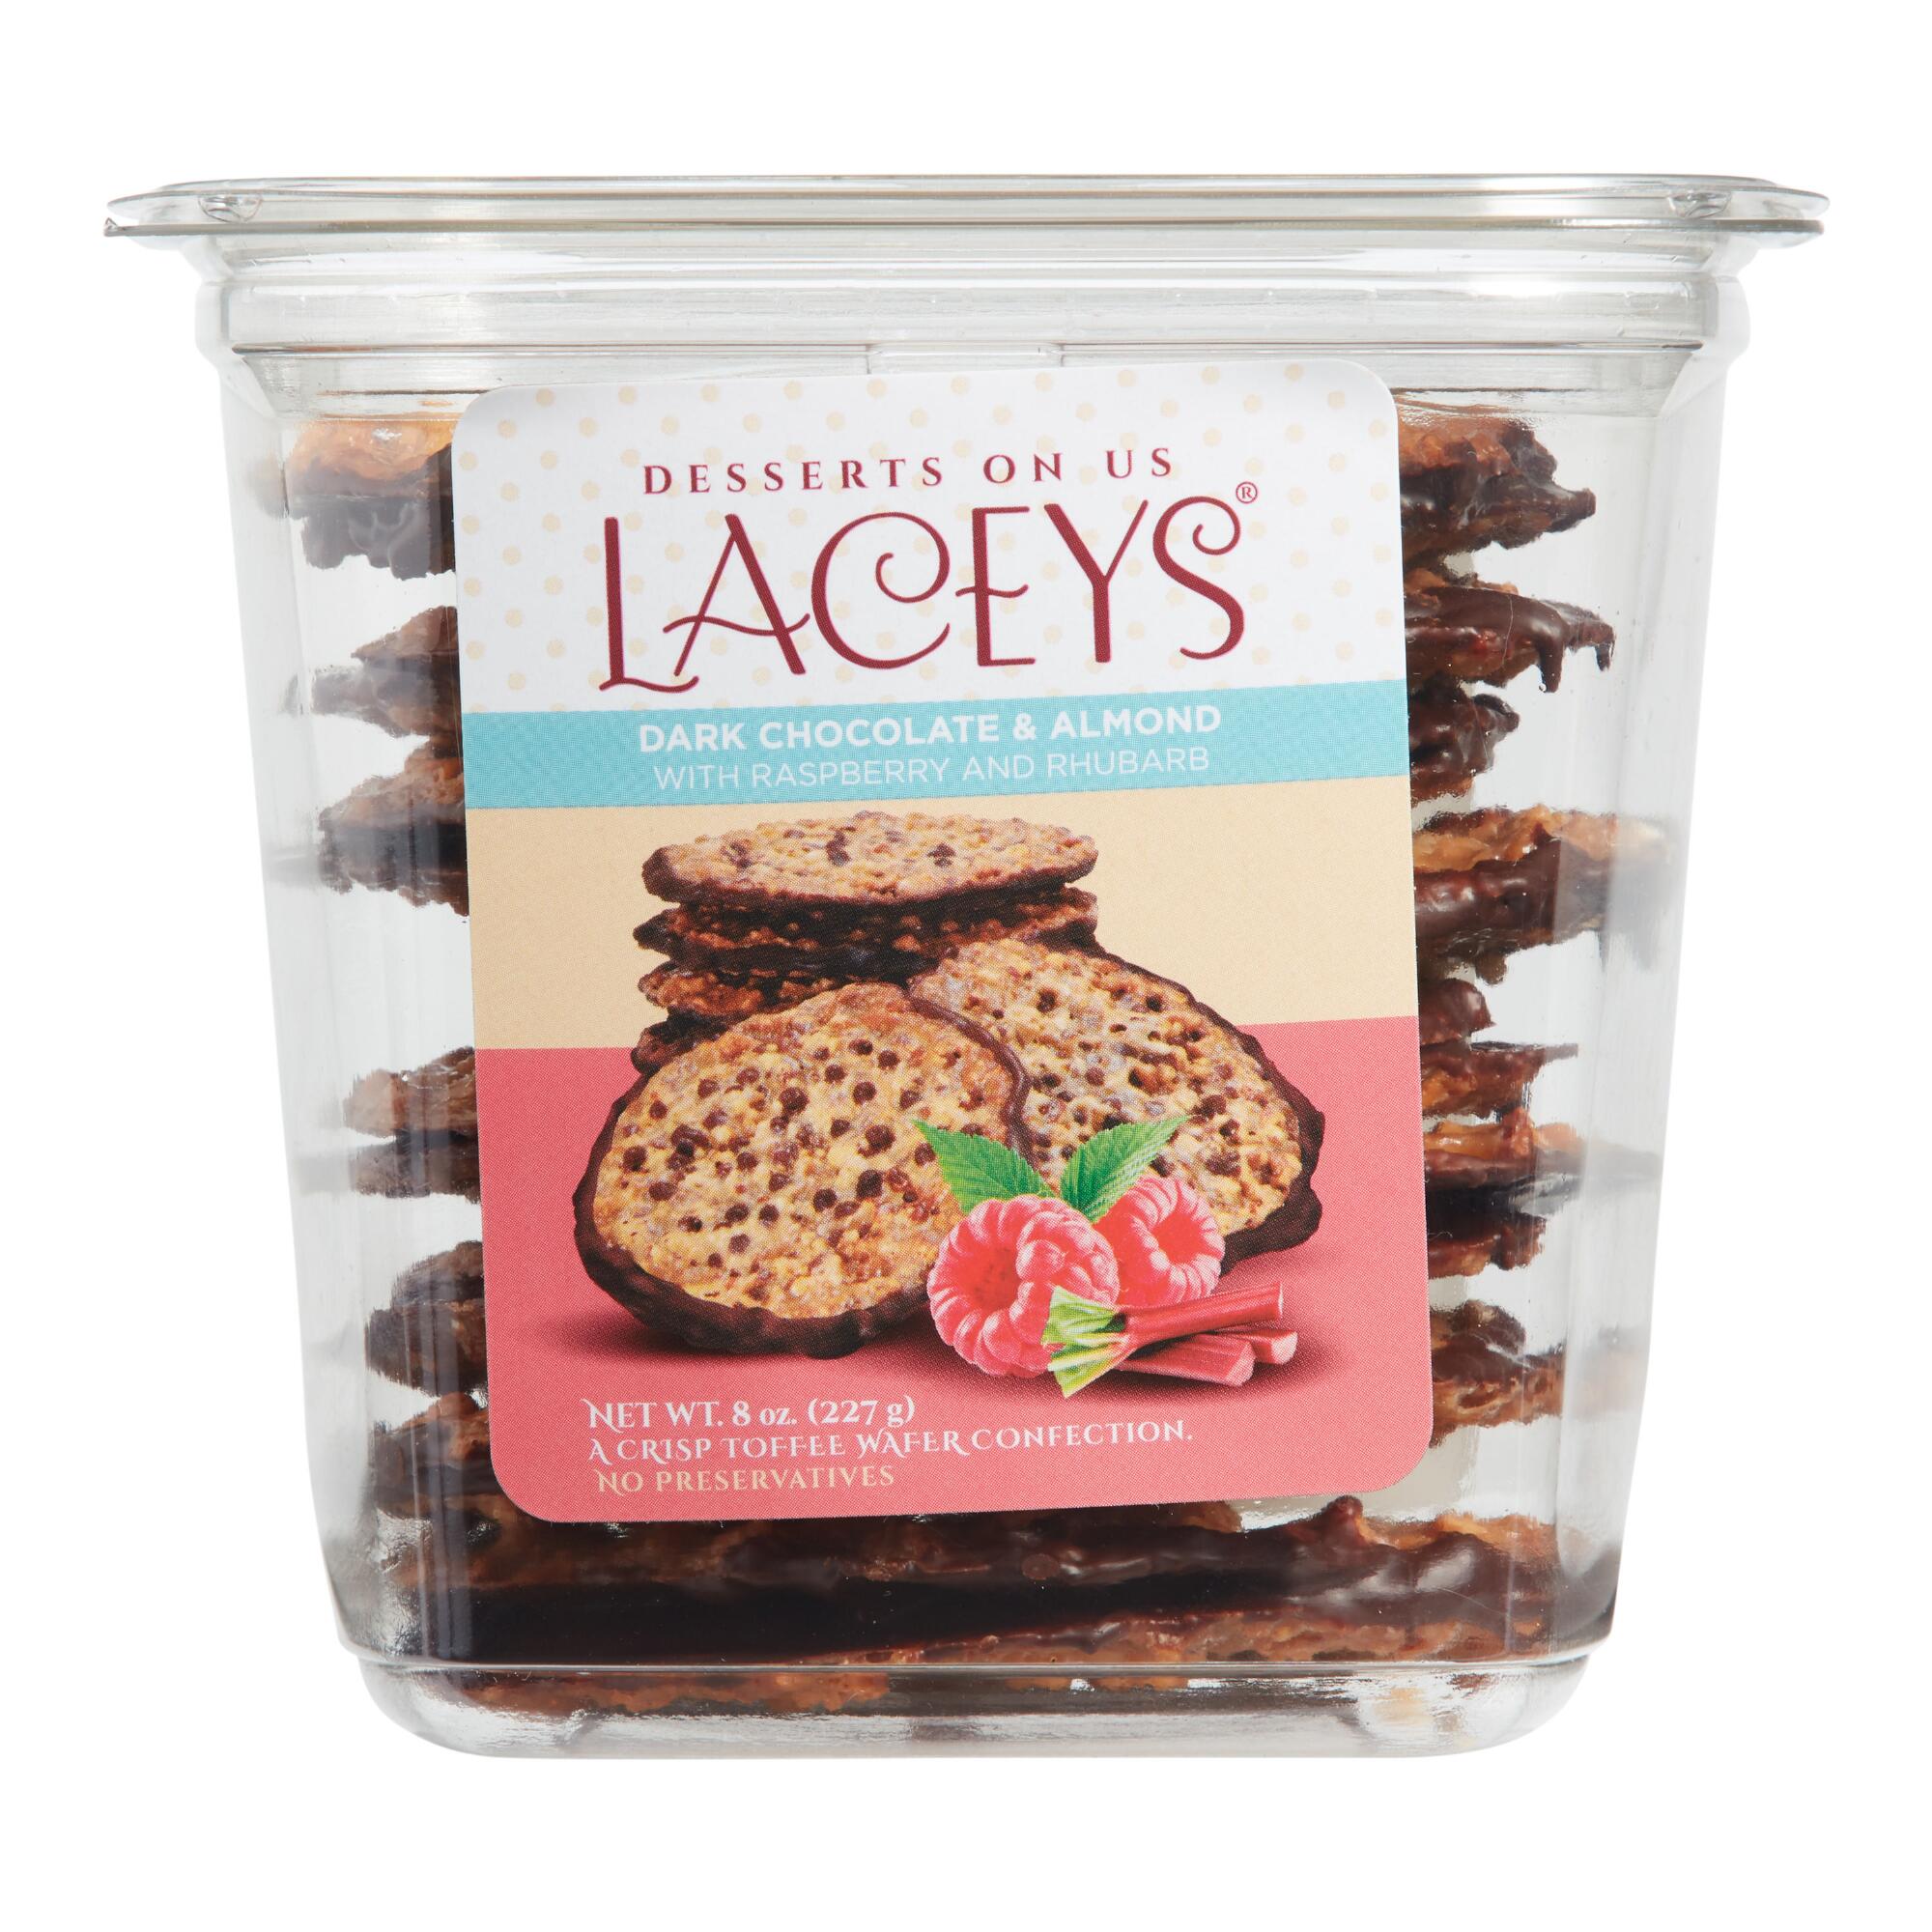 Desserts on Us Chocolate Almond Raspberry Rhubarb Laceys by World Market